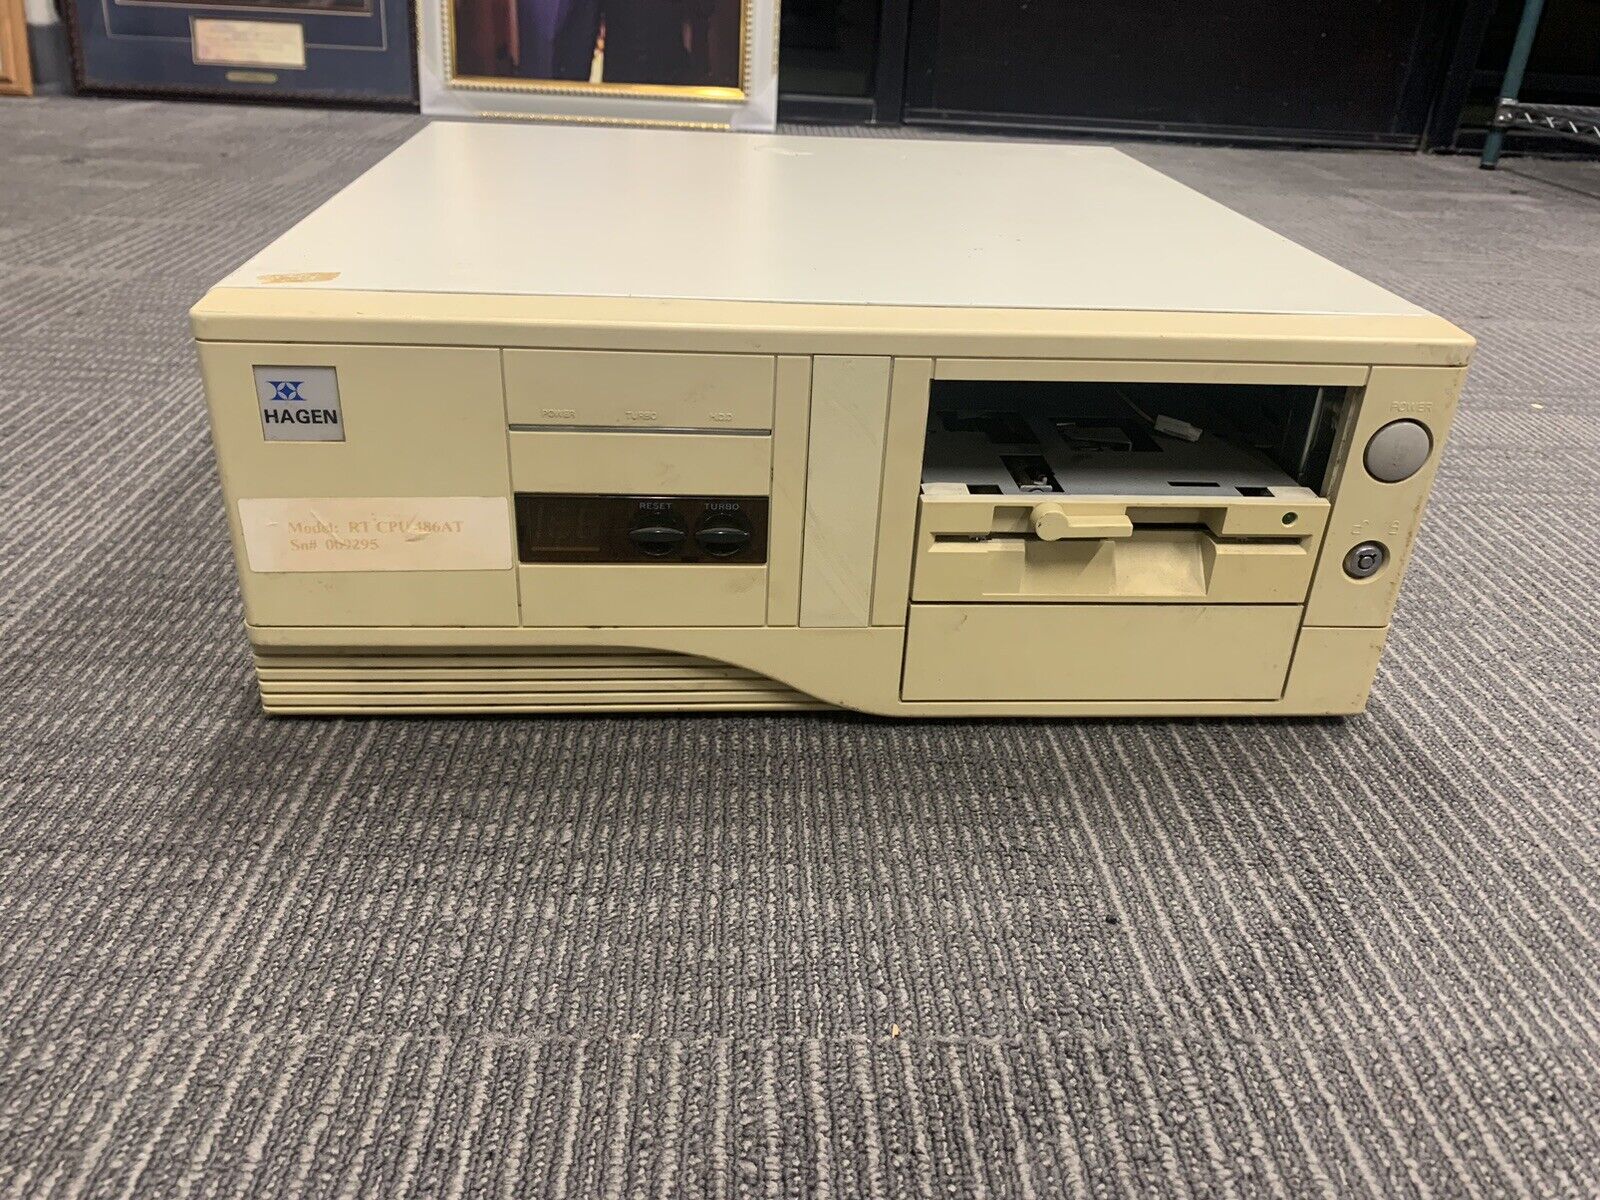 Vintage 486 Era Baby AT Computer Desktop Case with MHz LCD + 5.25 Floppy + PSU